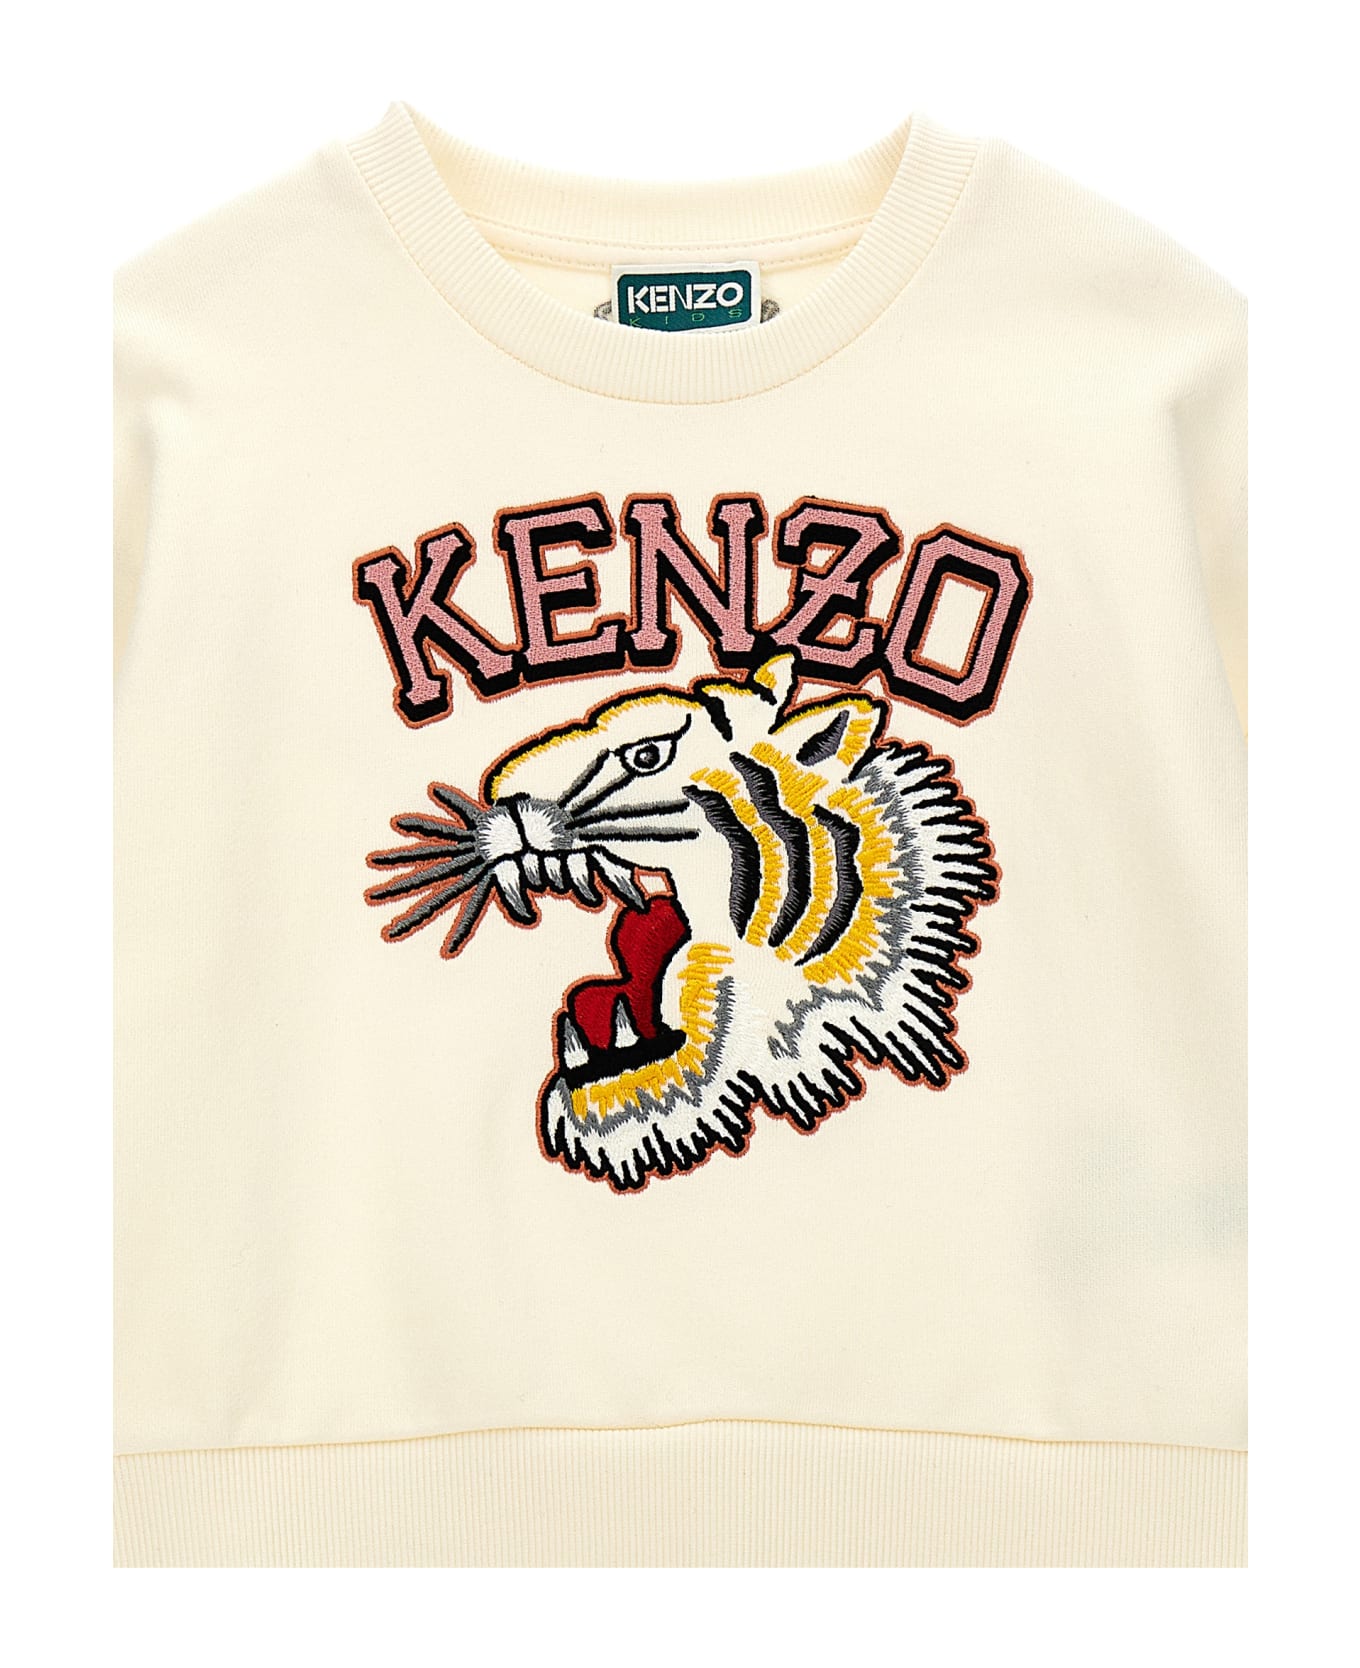 Kenzo Kids Logo Embroidery Sweatshirt - White